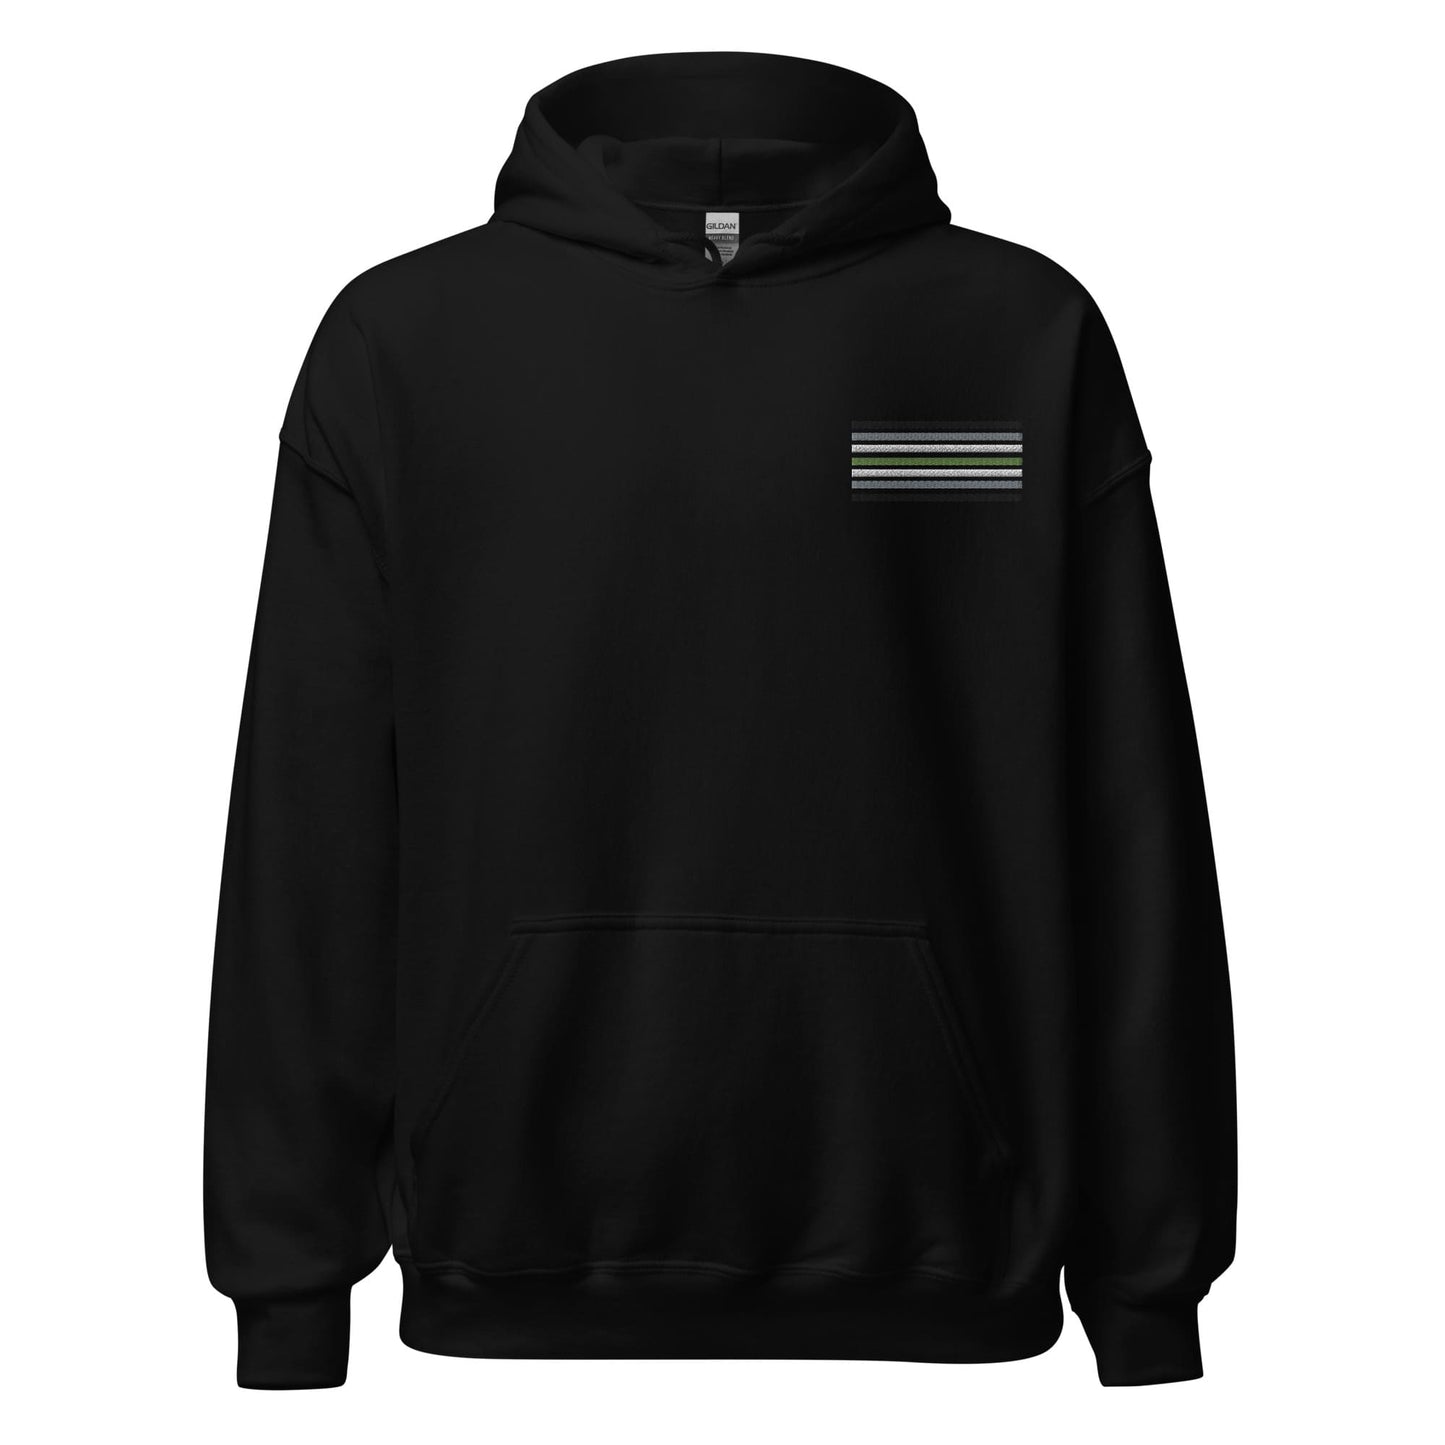 agender hoodie, subtle genderless pride flag embroidered pocket design hooded sweatshirt, hang